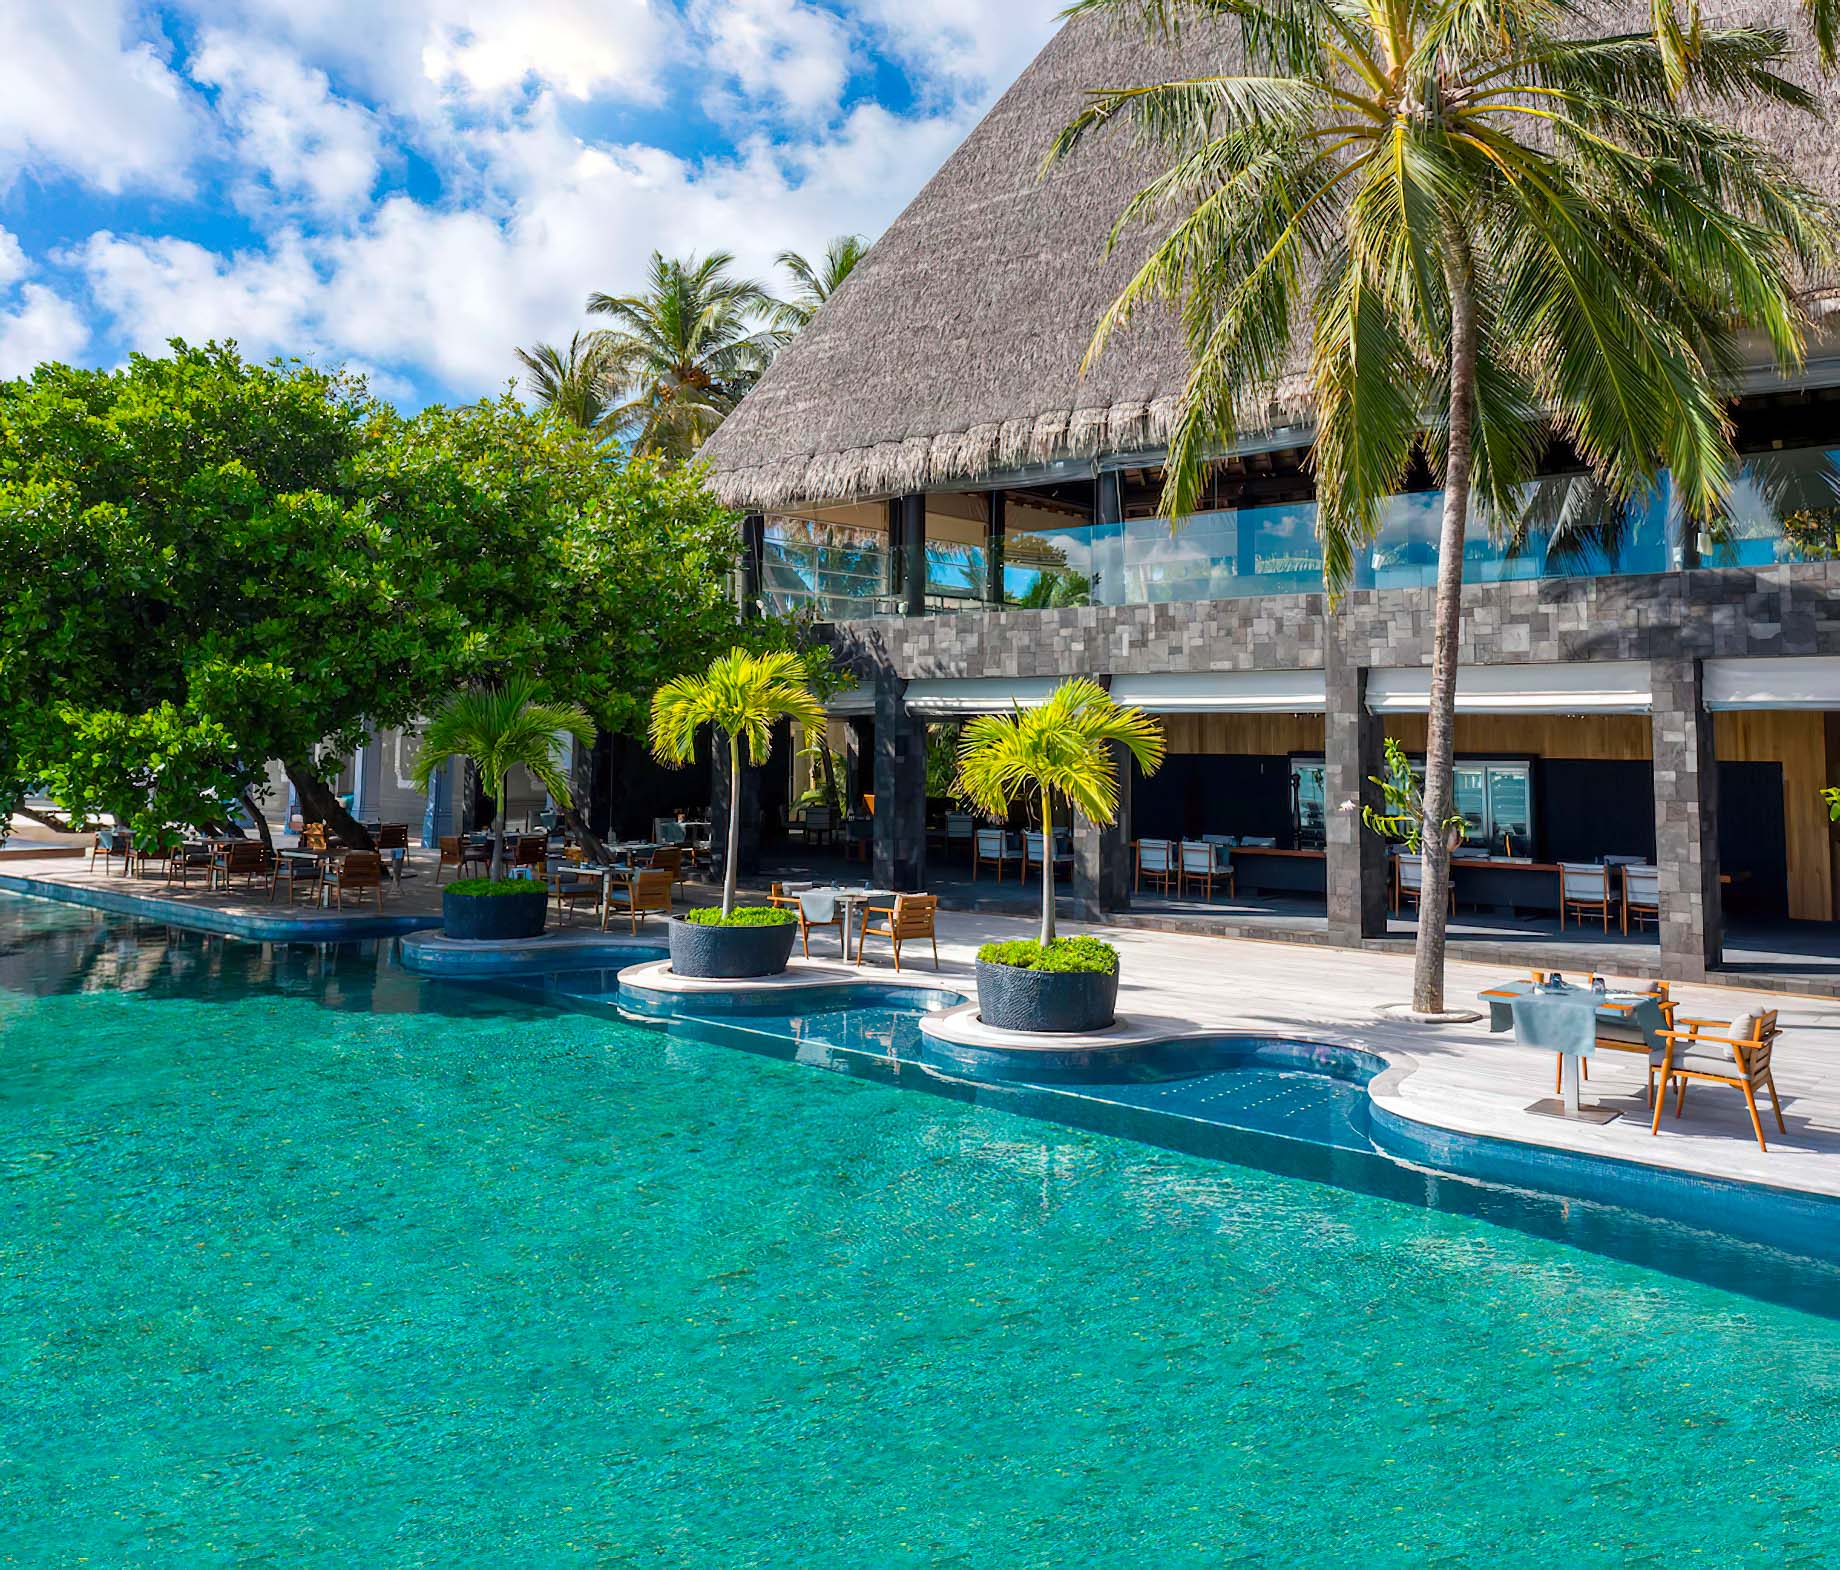 Anantara Kihavah Maldives Villas Resort – Baa Atoll, Maldives – Manzaru Restaurant Poolside Dining